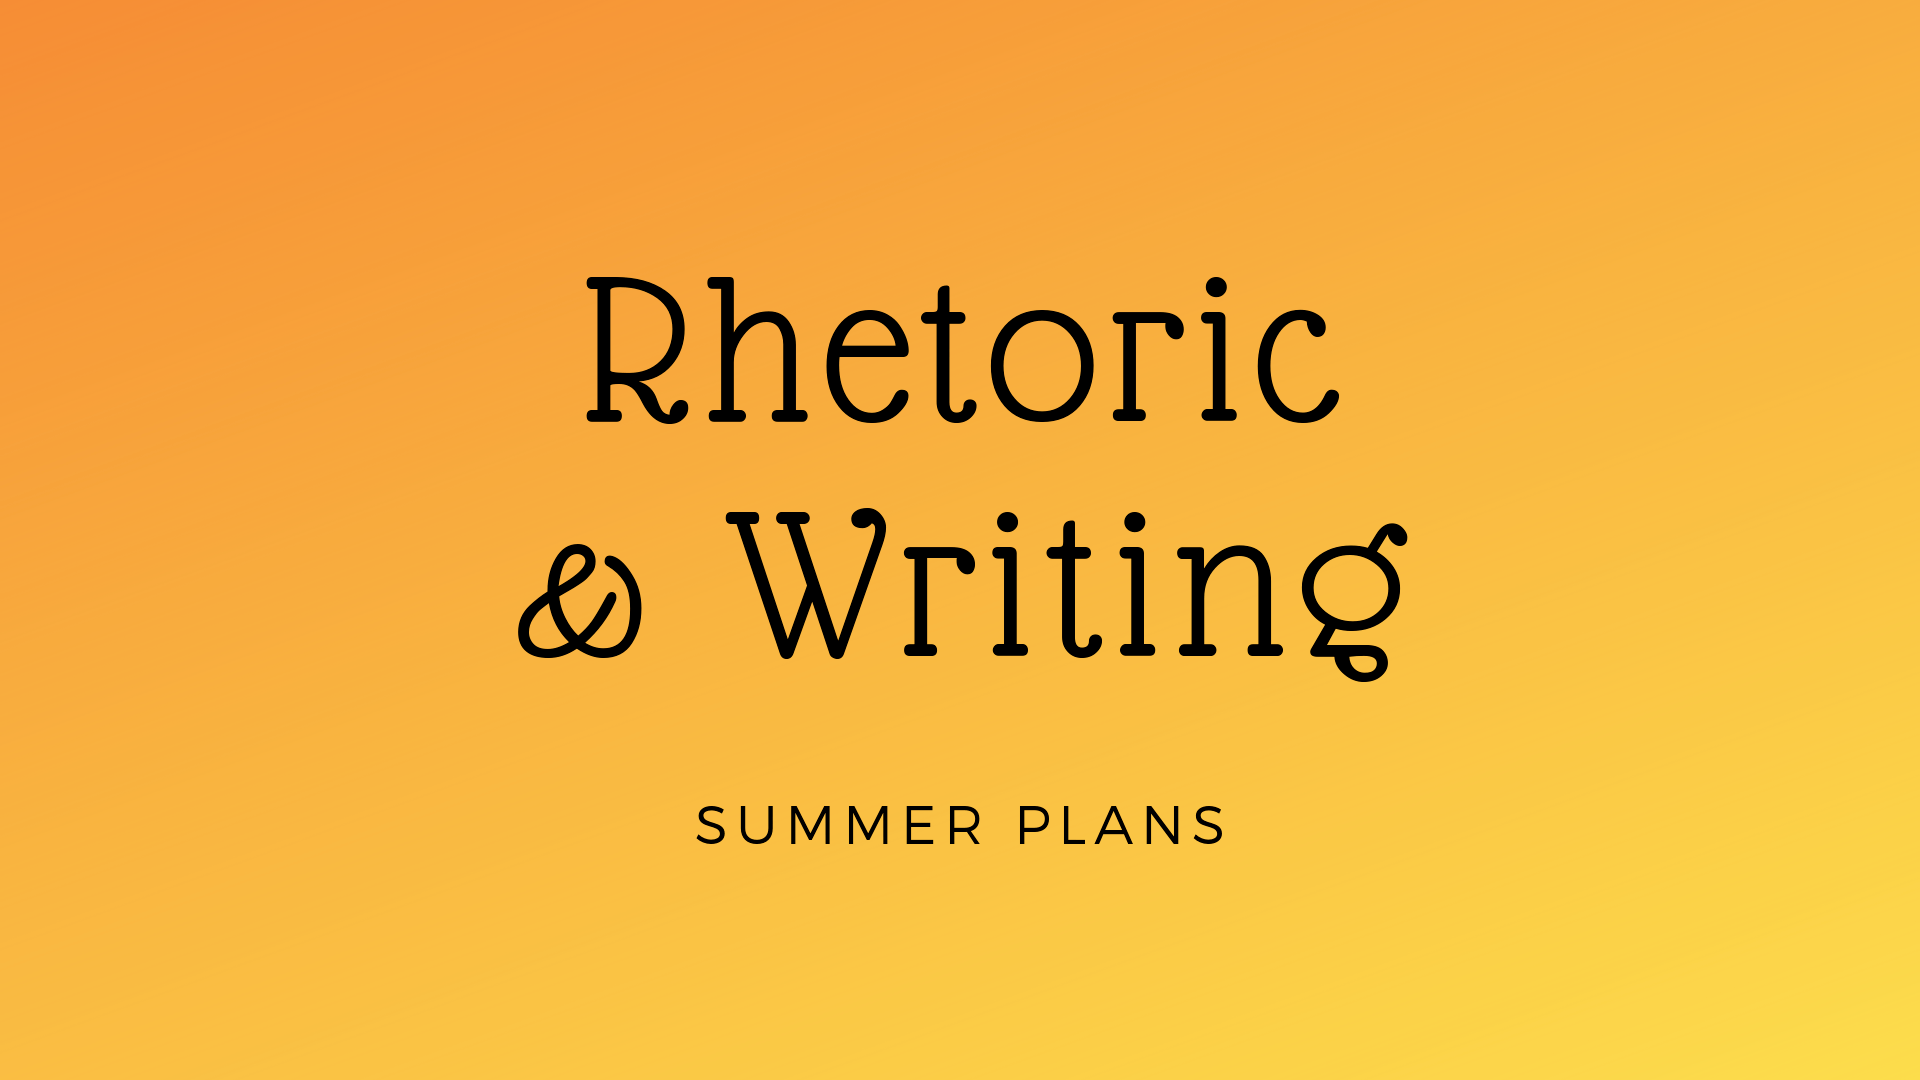 Rhetoric & Writing Summer Plans